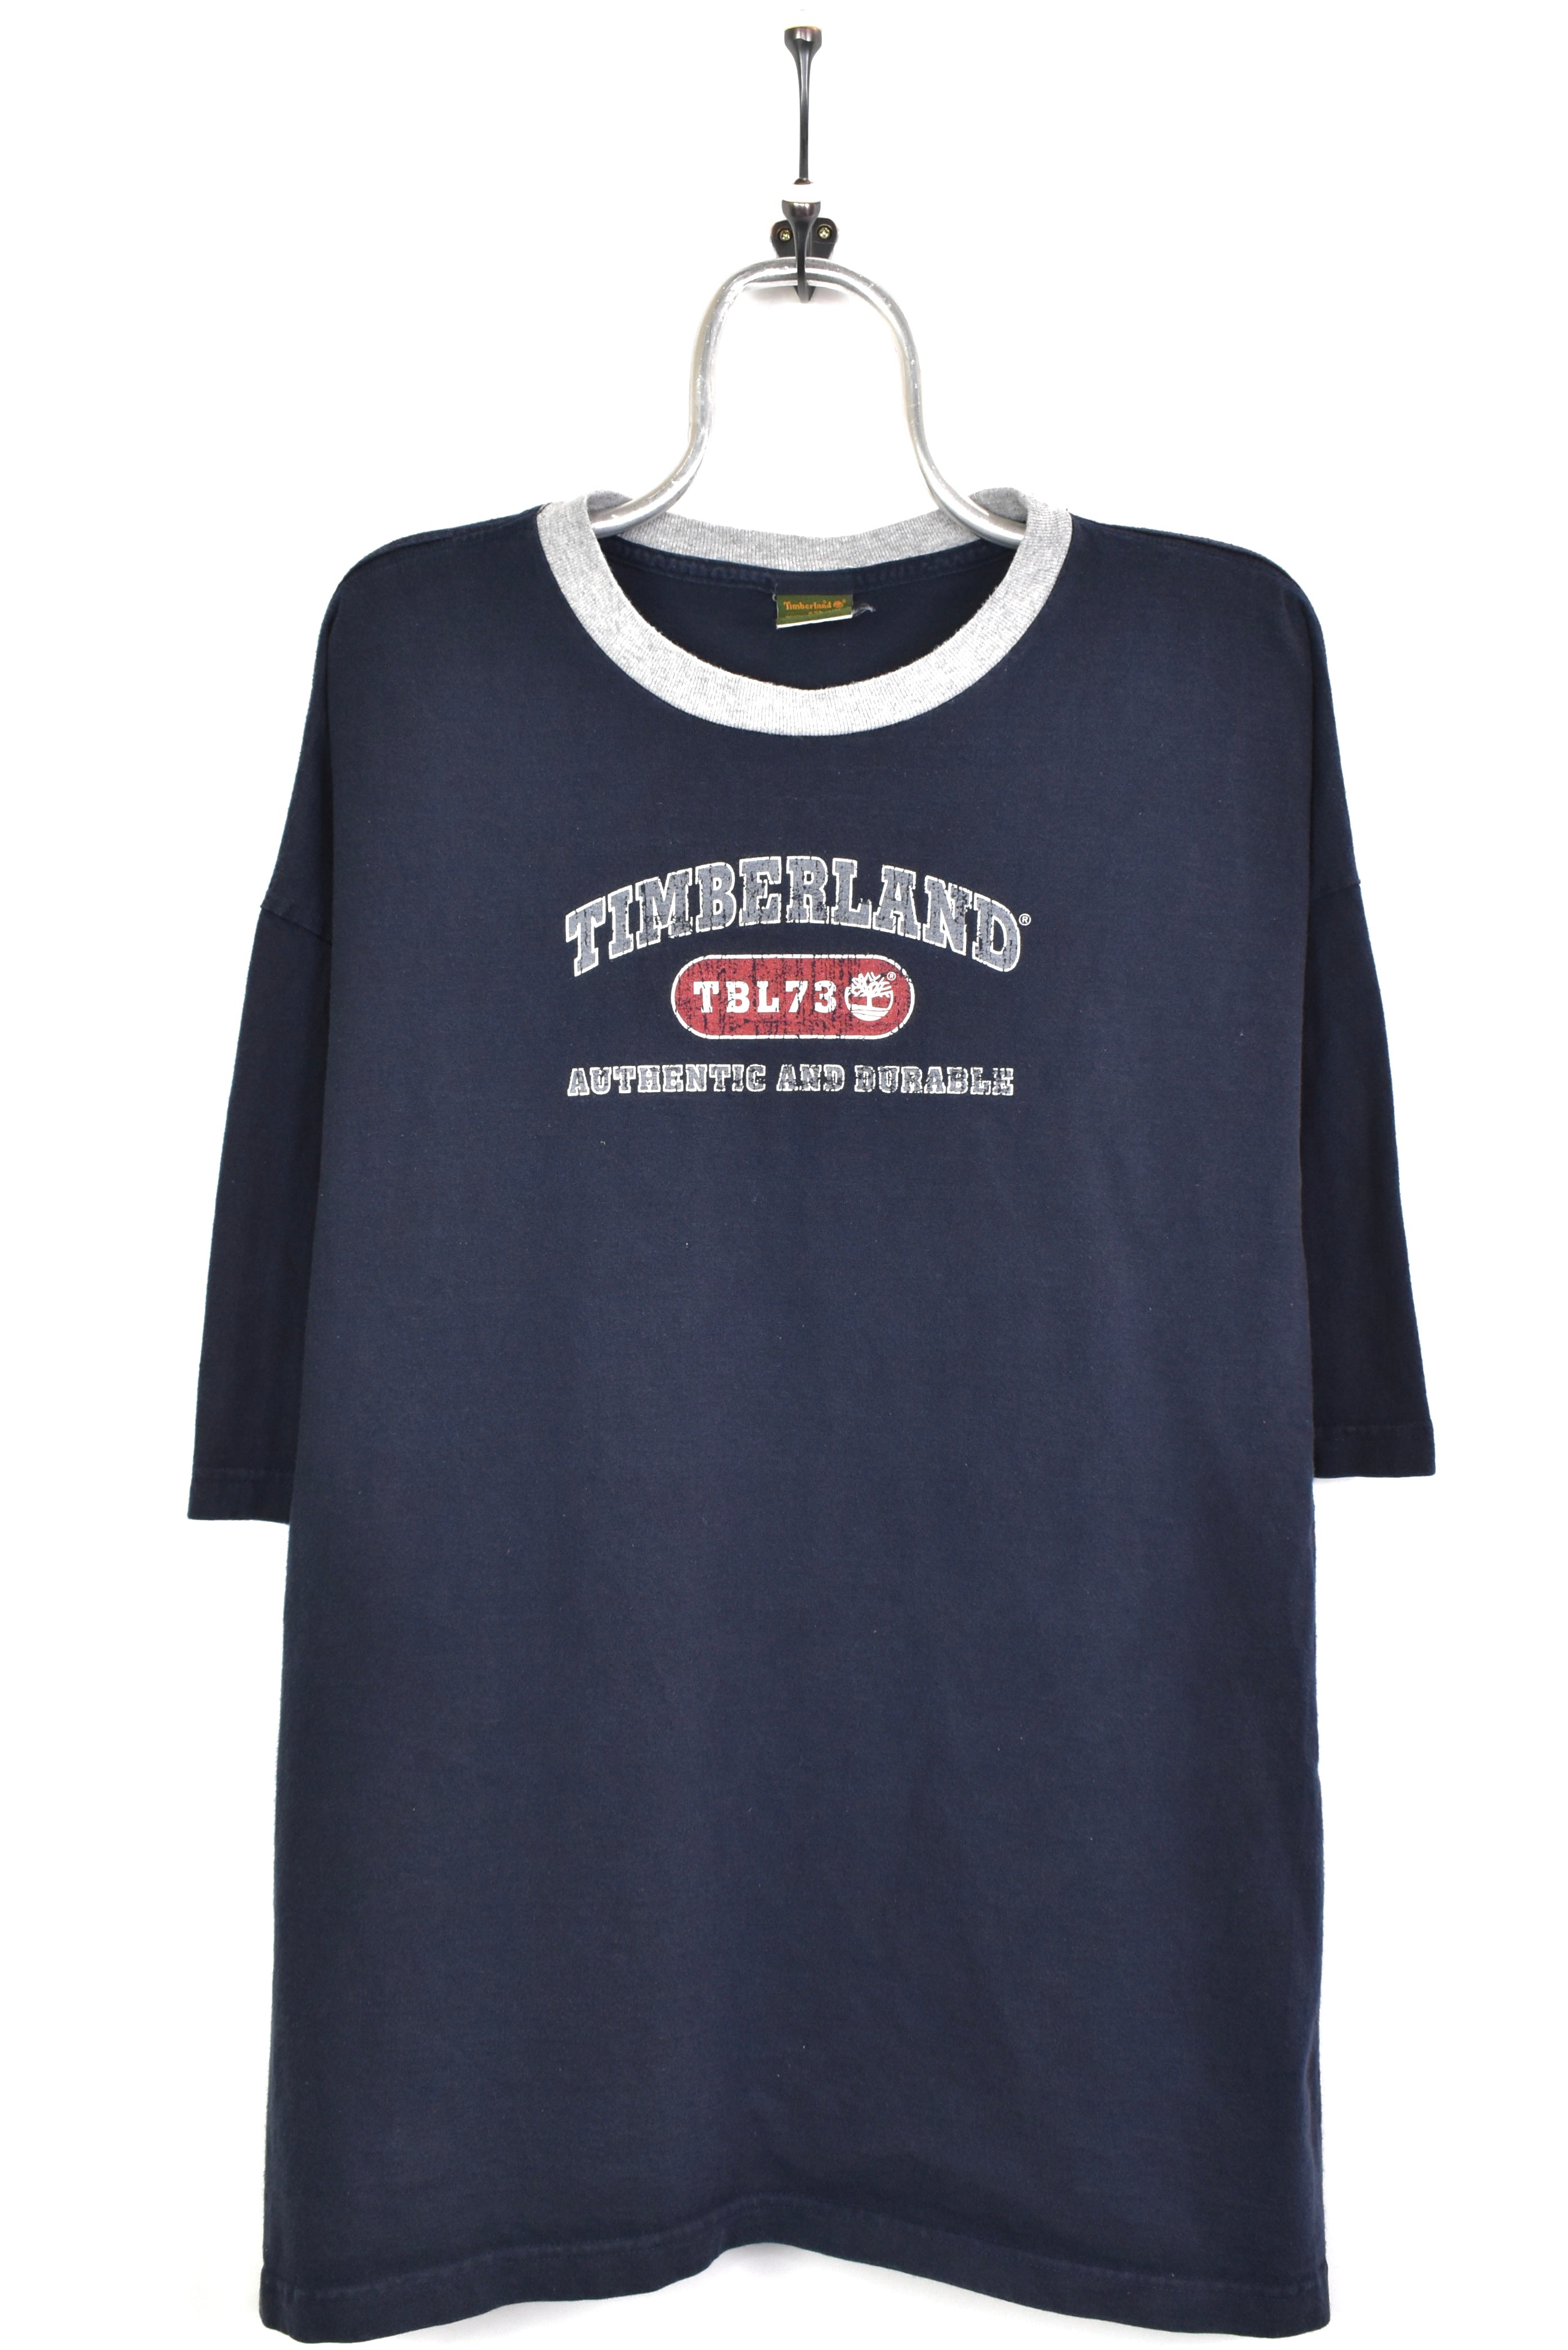 Vintage Timberland shirt, short sleeve graphic tee - XXL, navy blue TIMBERLAND